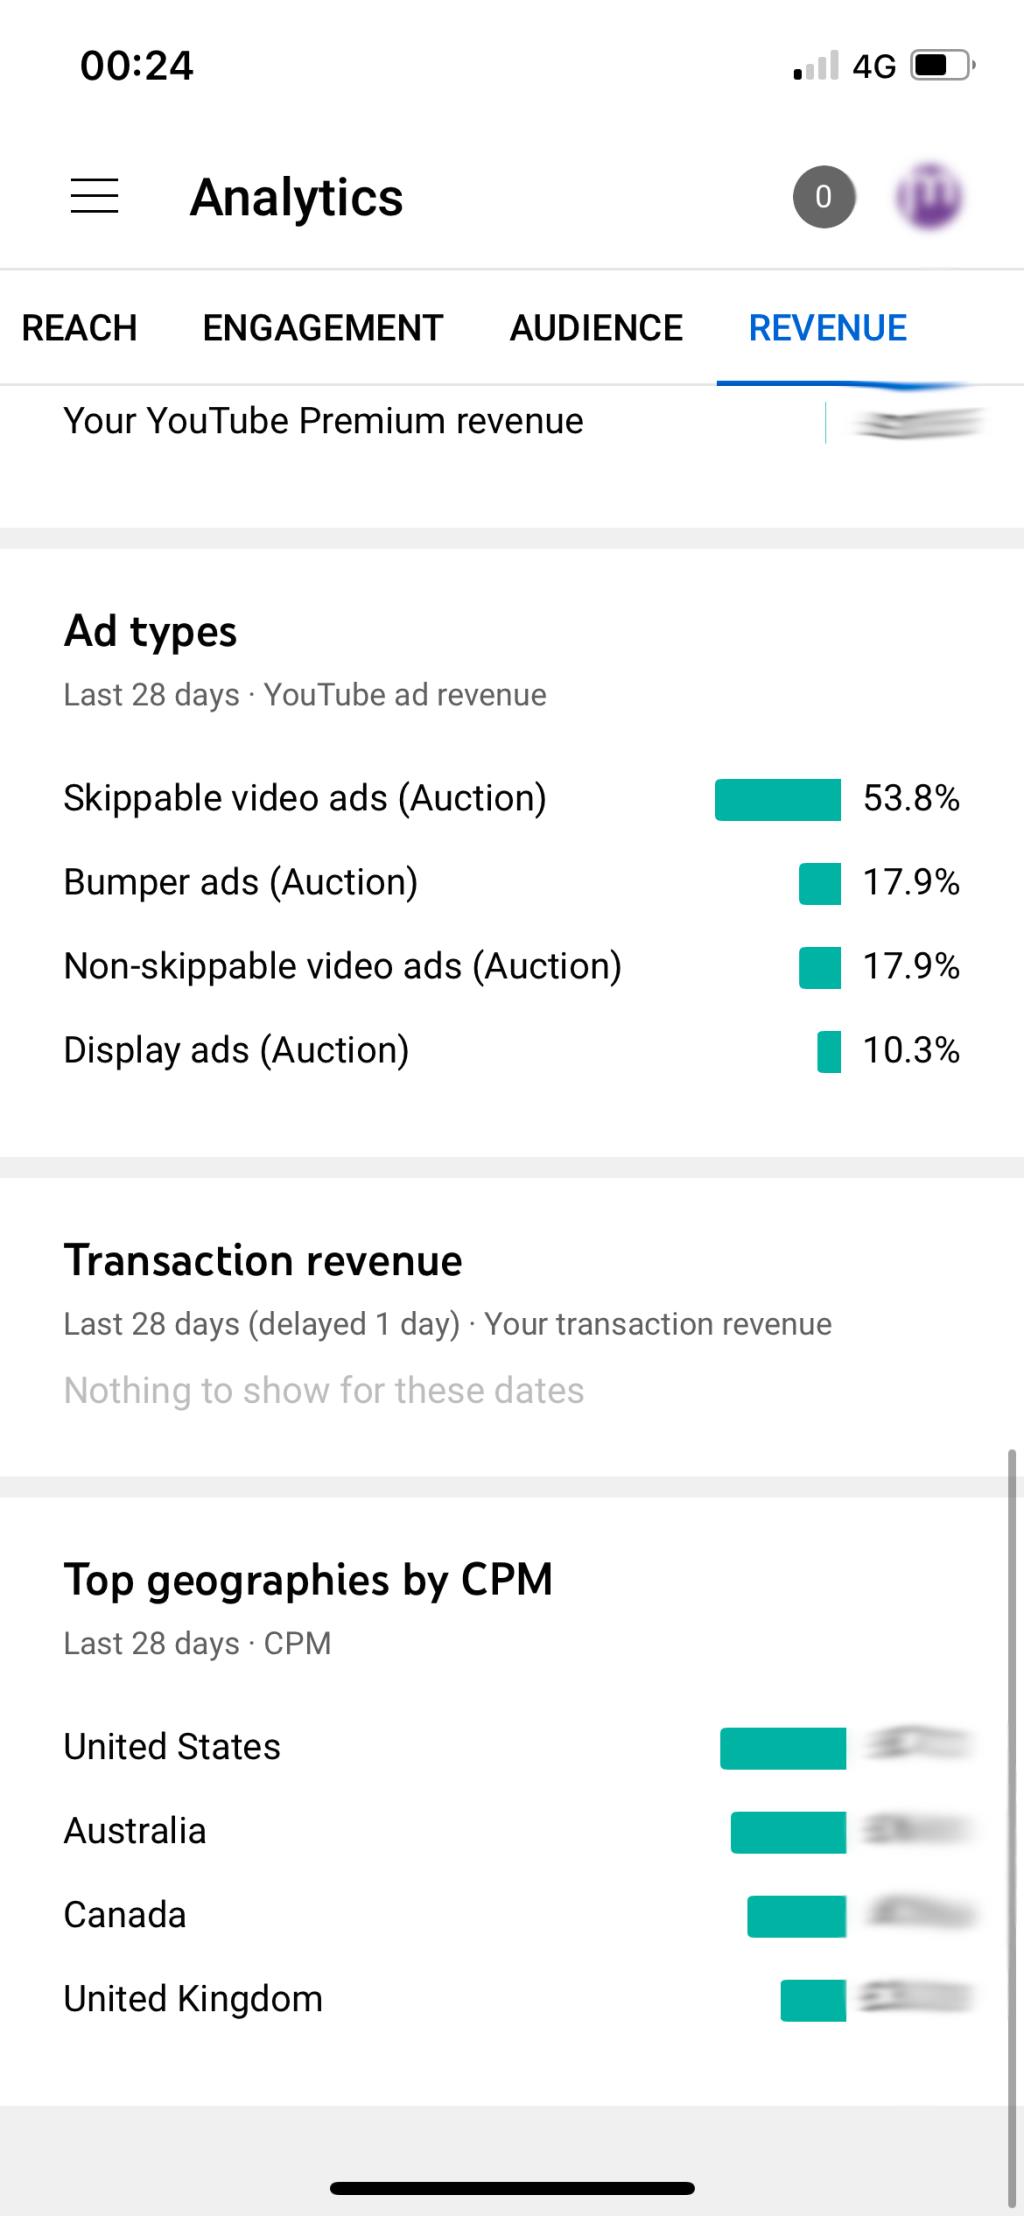 YouTube 스튜디오 앱을 사용하여 수입 및 분석을 확인하는 방법